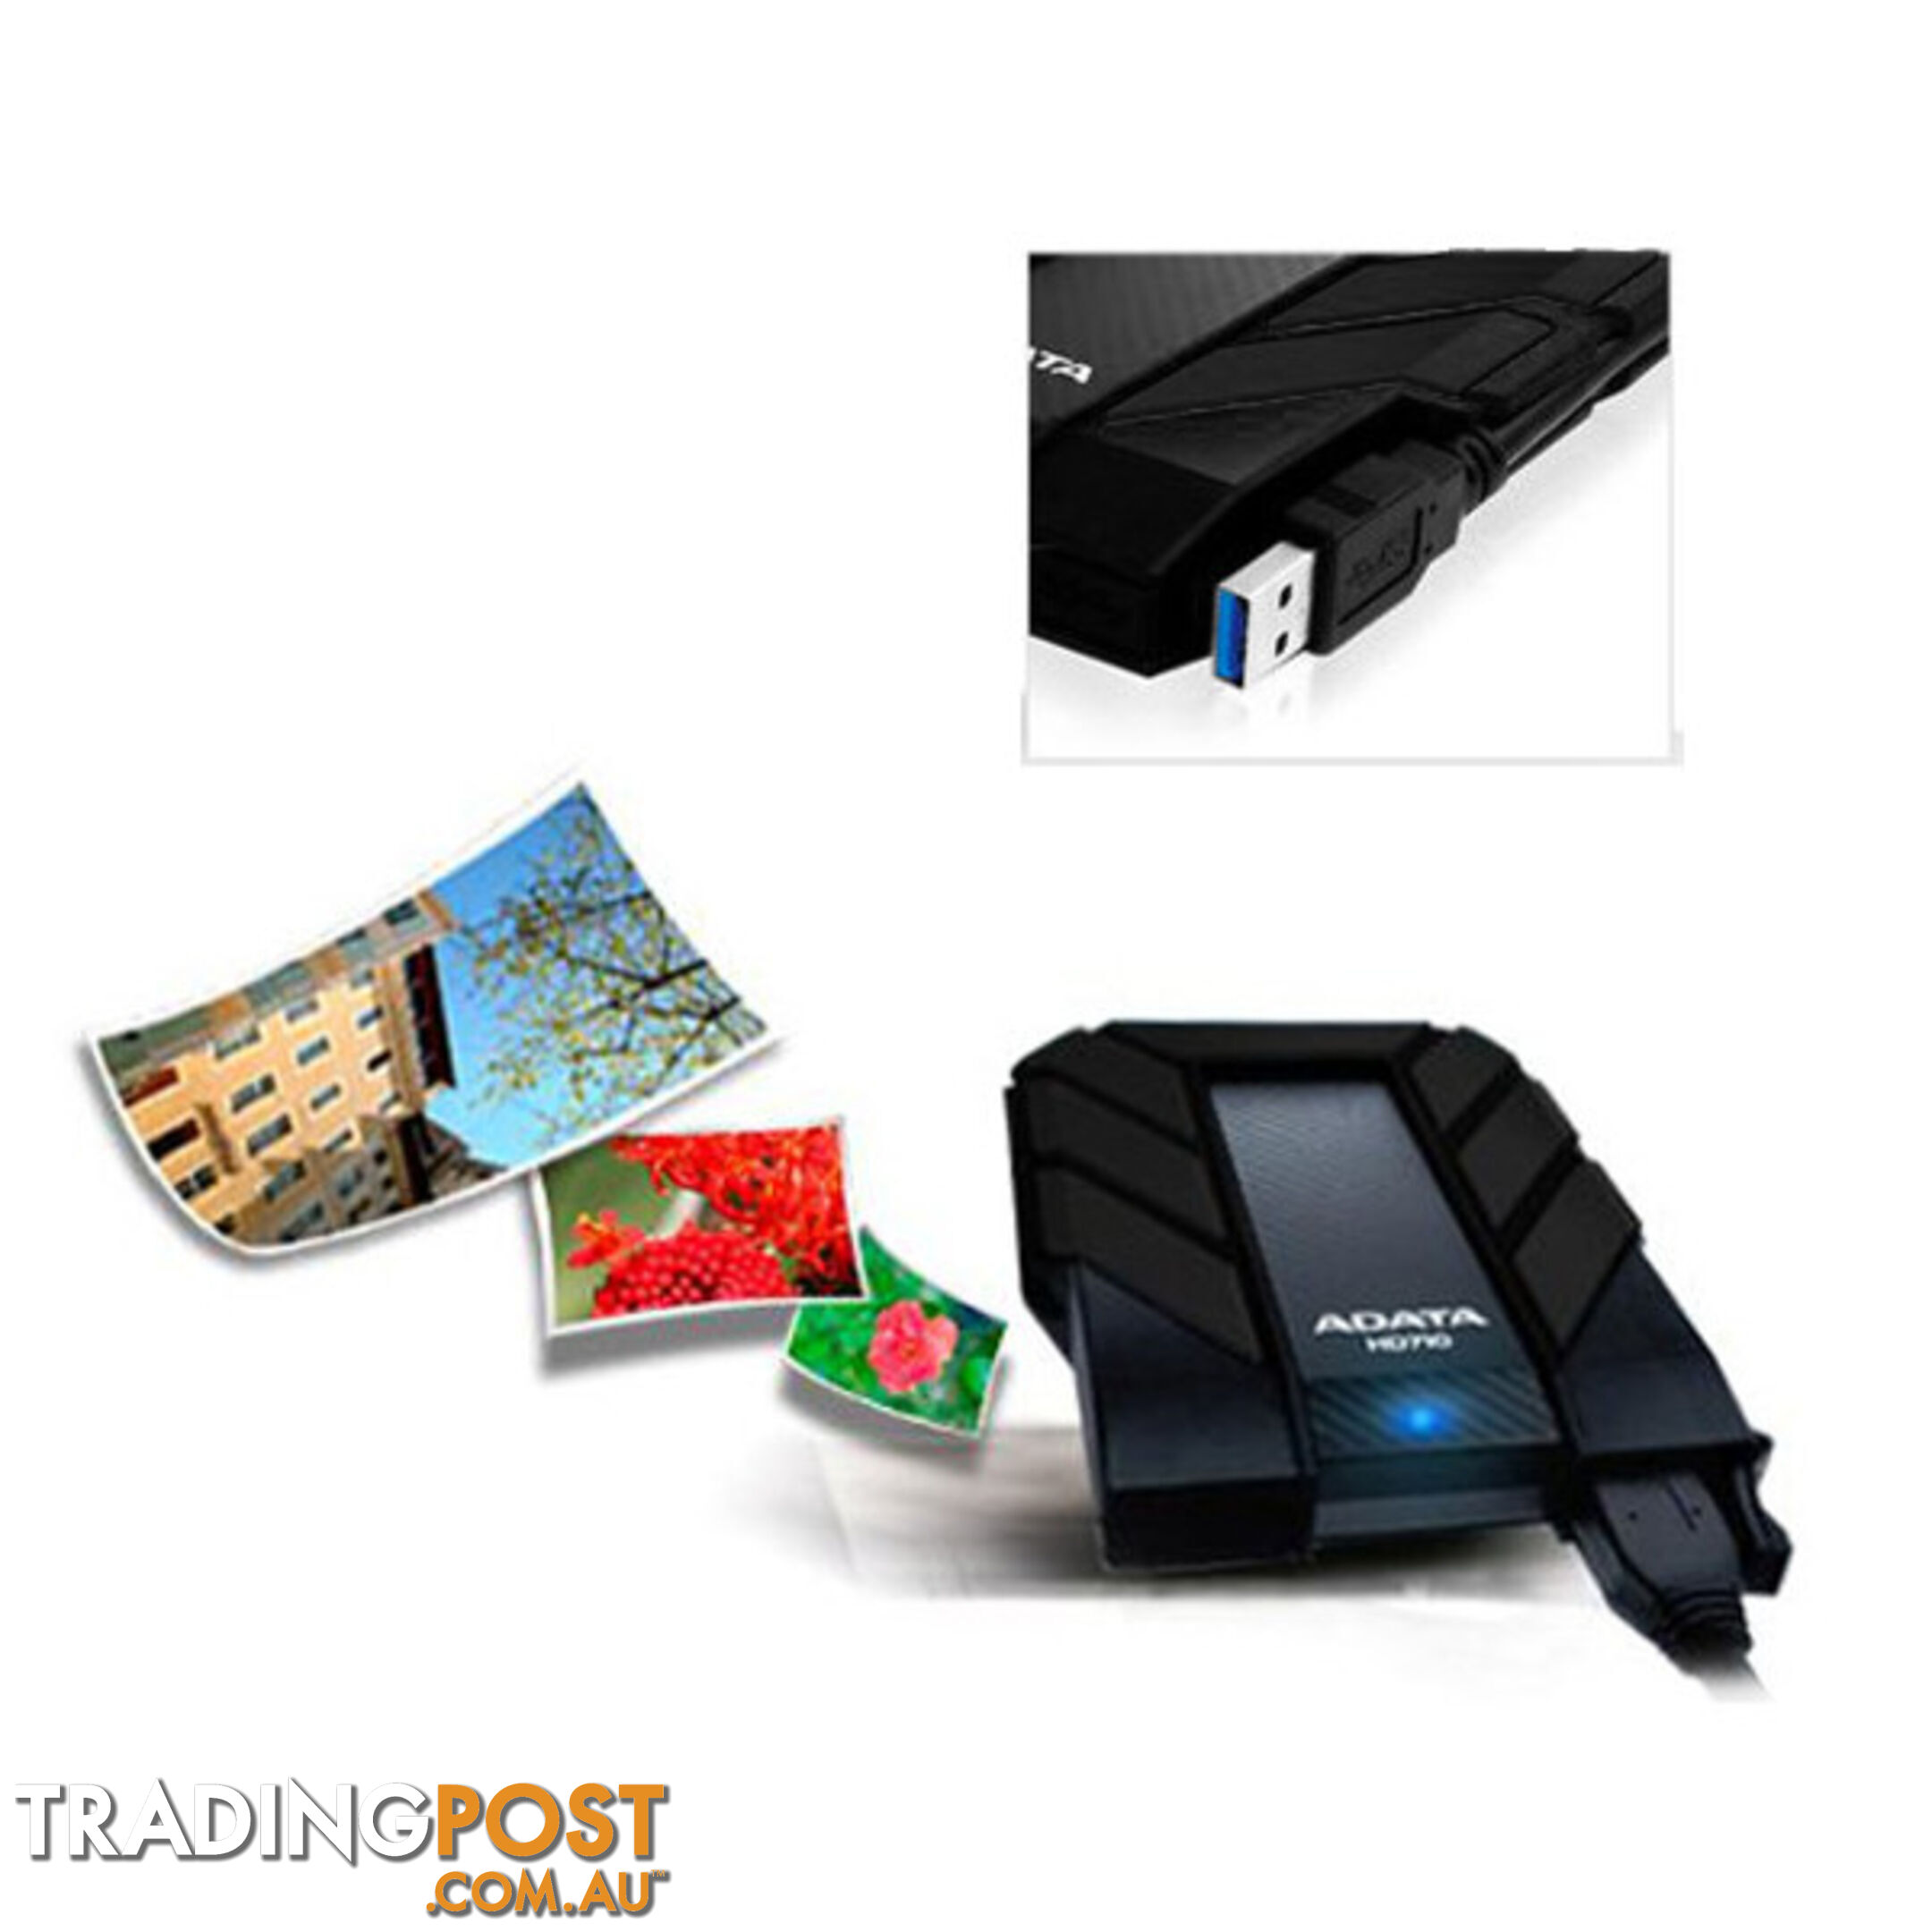 AHD710-2TU3-CBK ADATA HD710 Waterproof/Dustproof/Shock-Resistant 2TB USB 3.0 External Hard Drive- Black